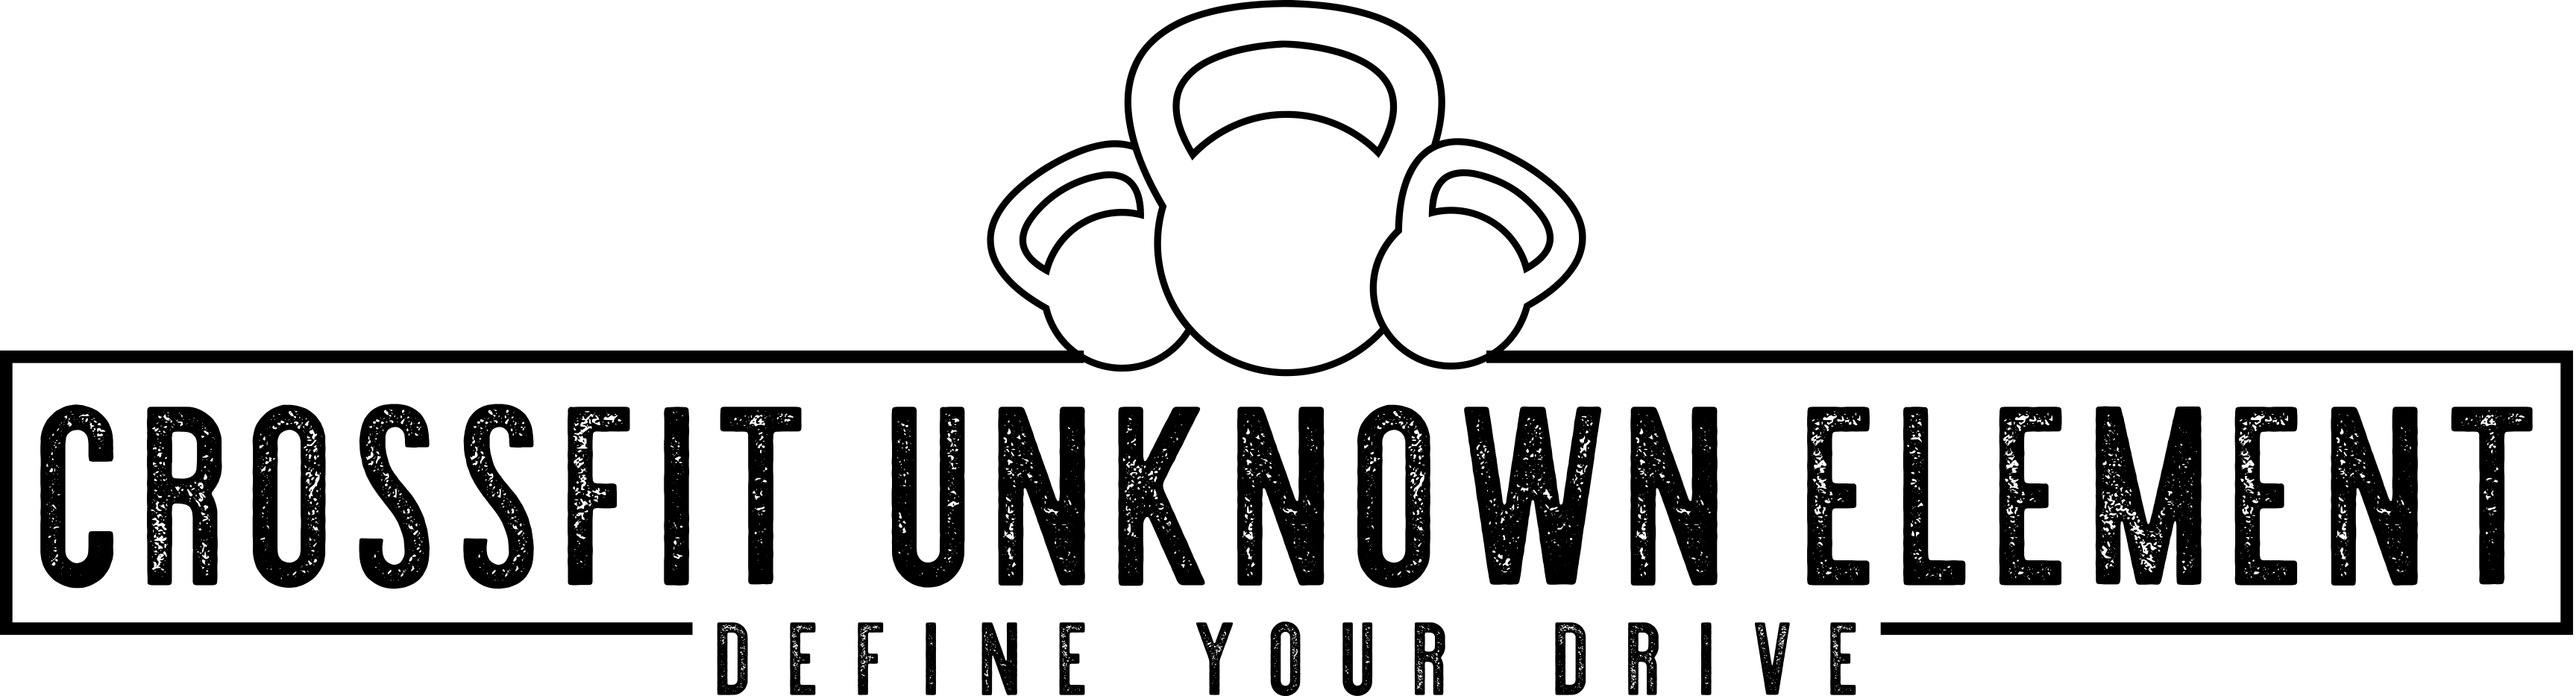 CrossFit Unknown Element logo